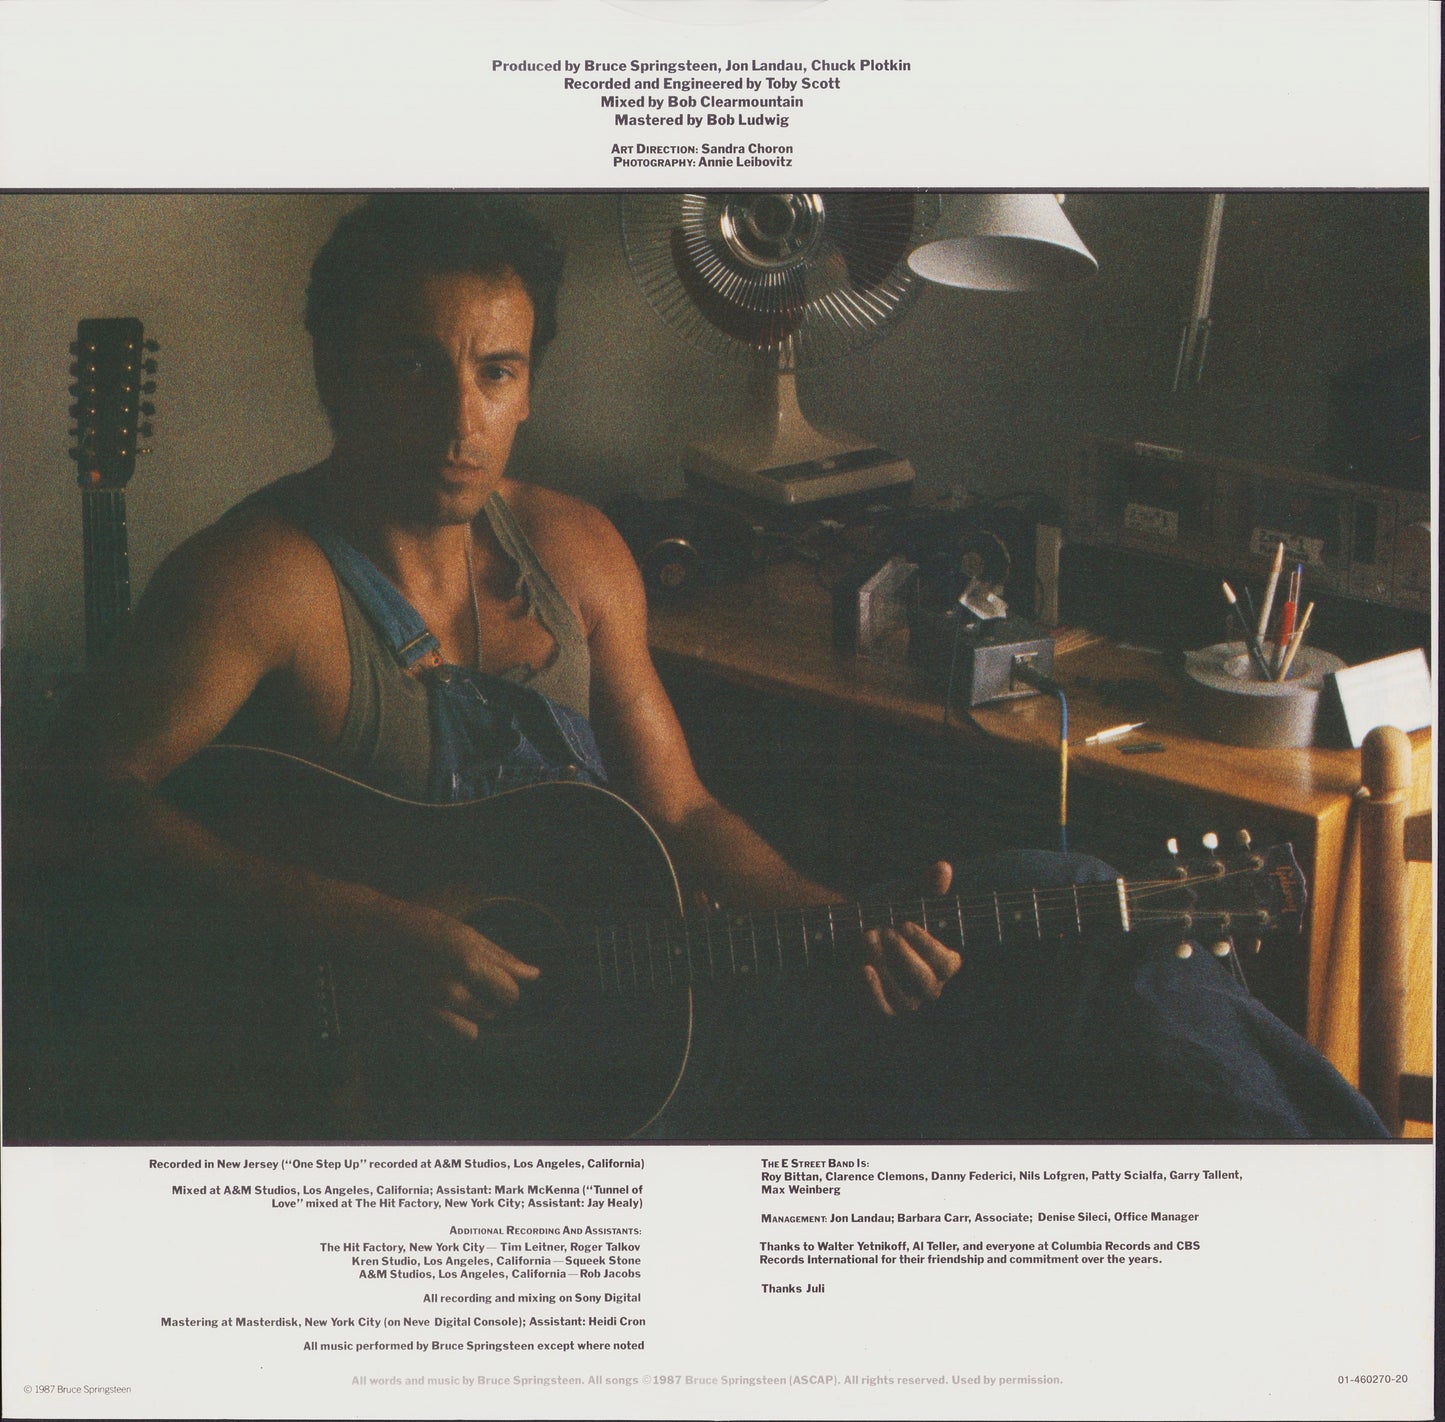 Bruce Springsteen ‎- Tunnel Of Love Vinyl LP EU